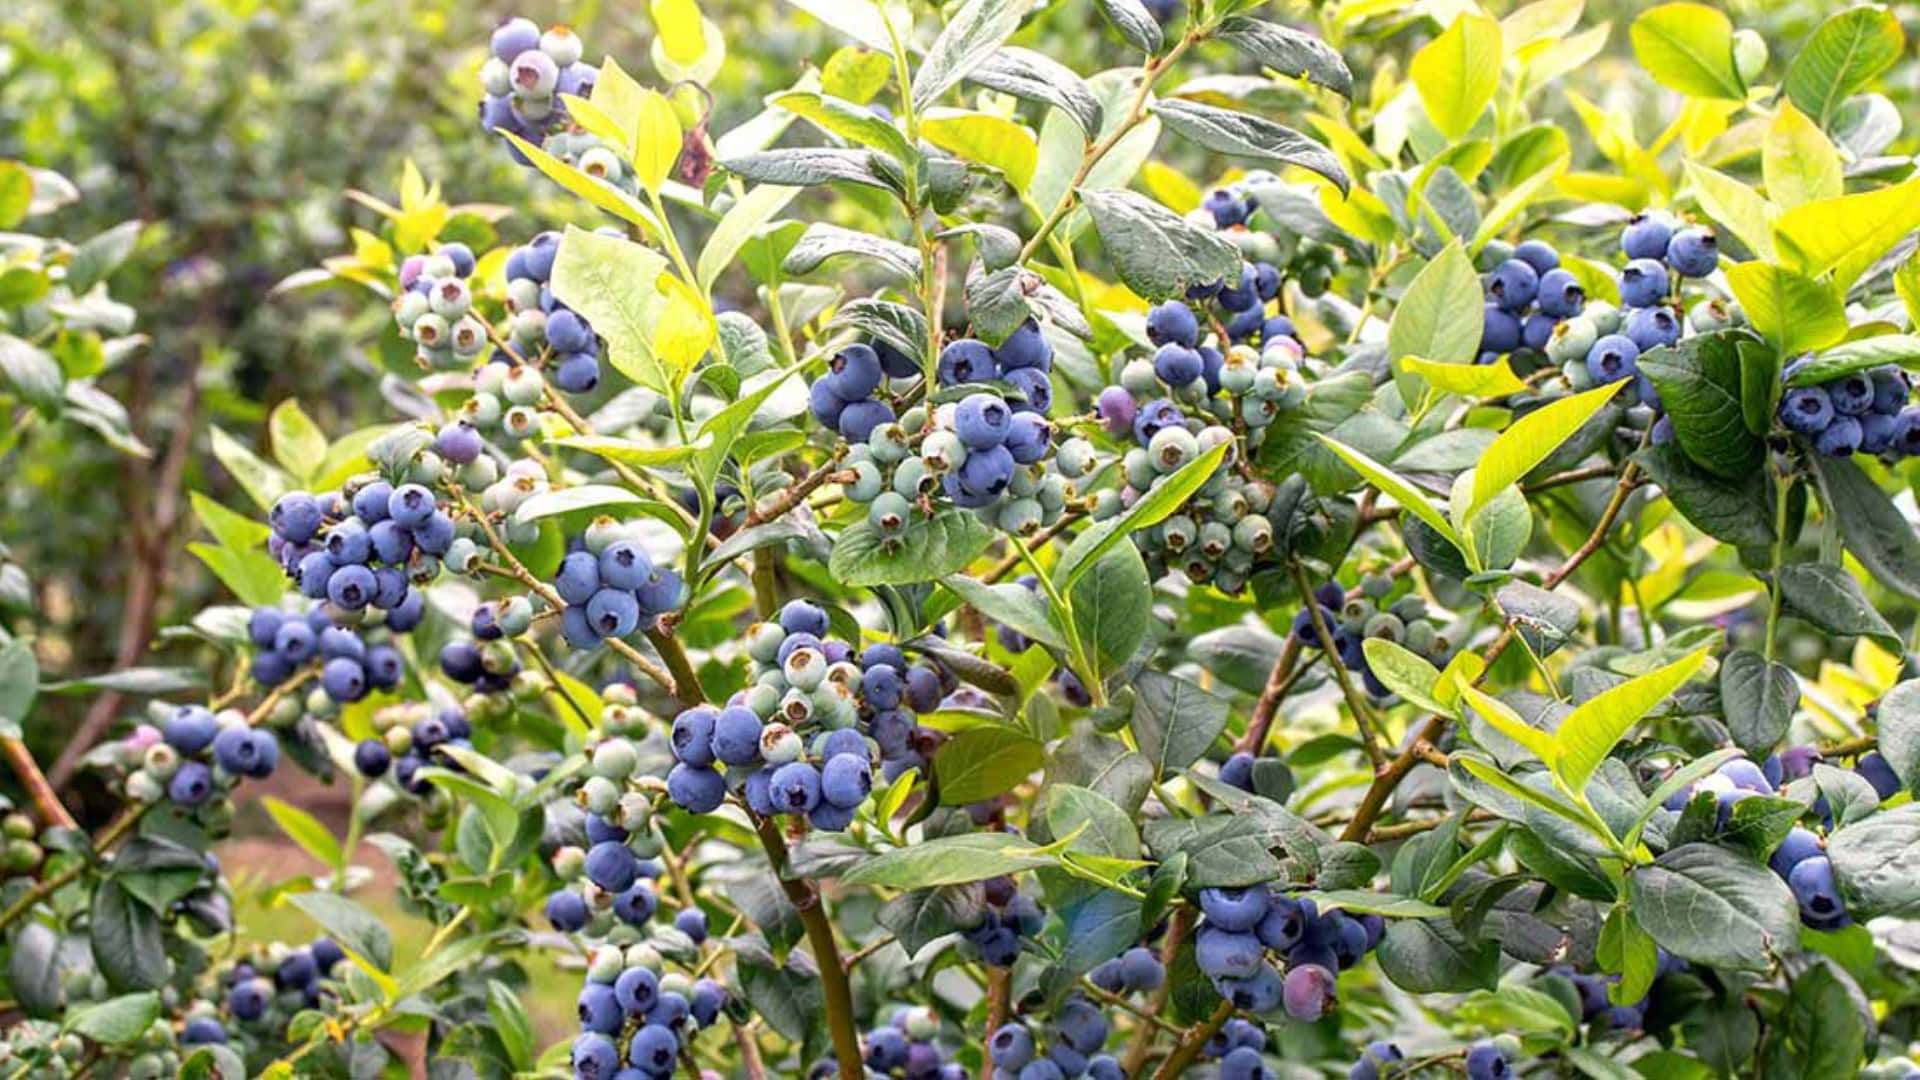 Delicious Blueberries